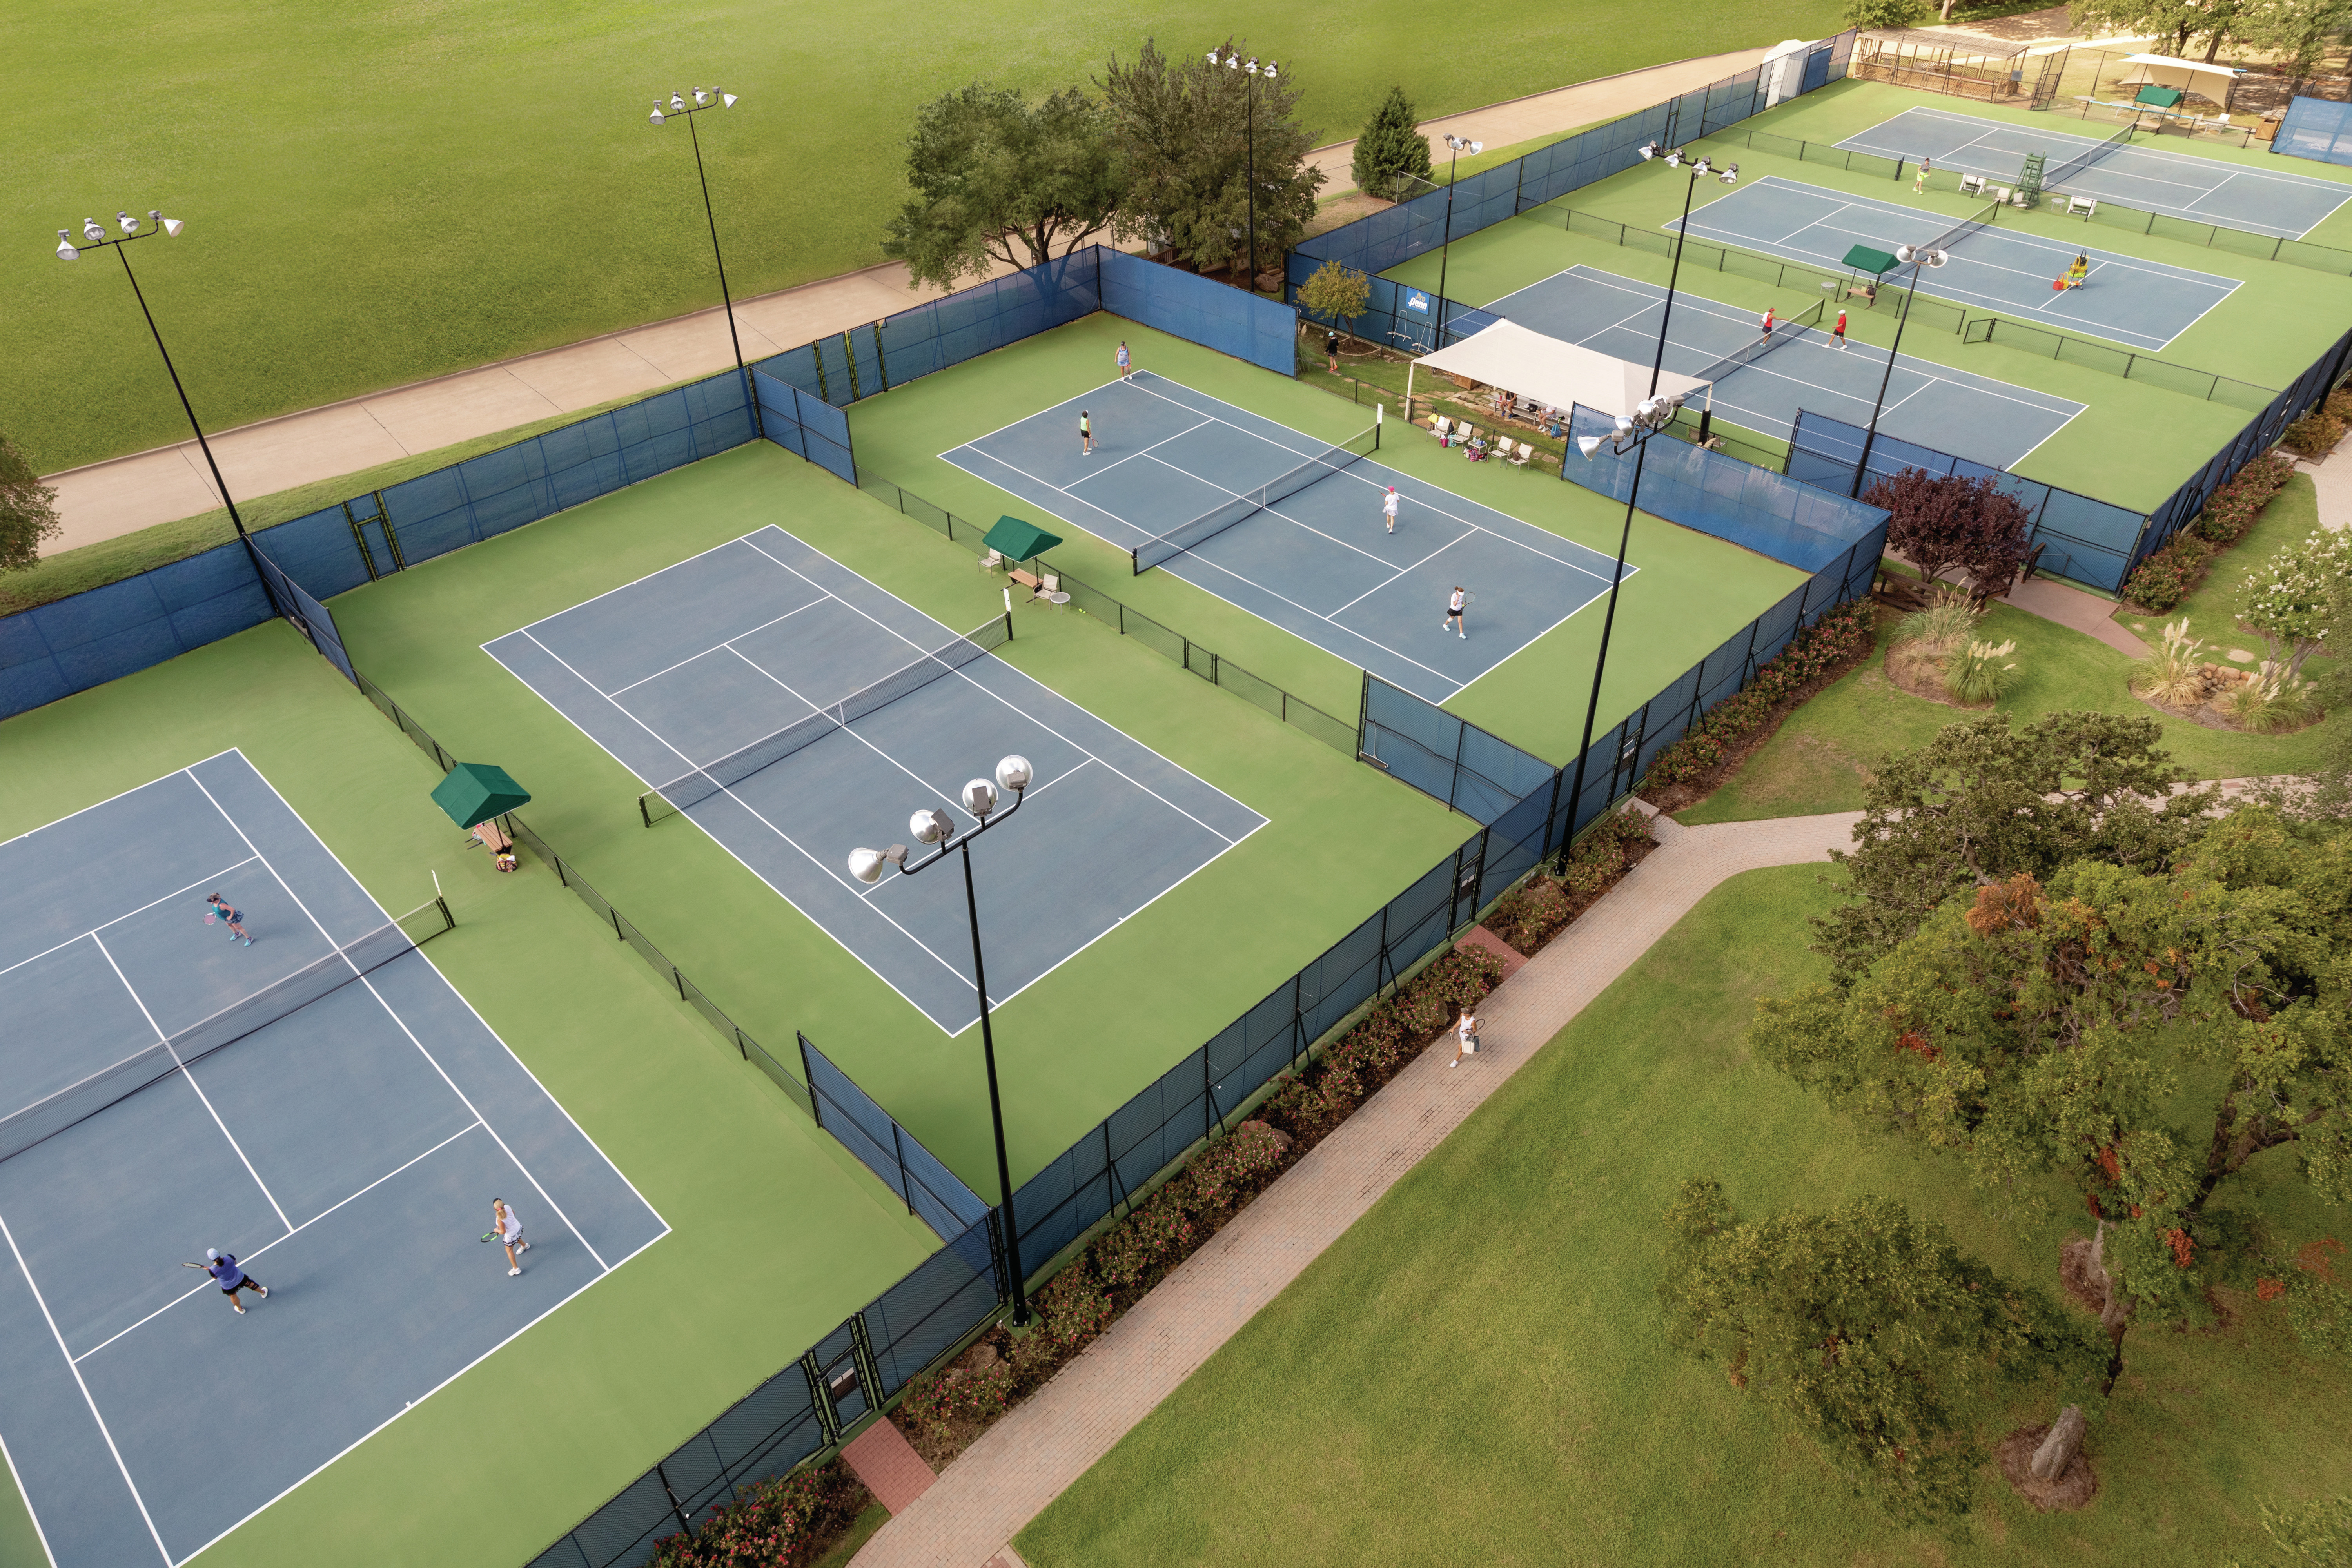 Hilton Hotel Outdoor Tennis Courts